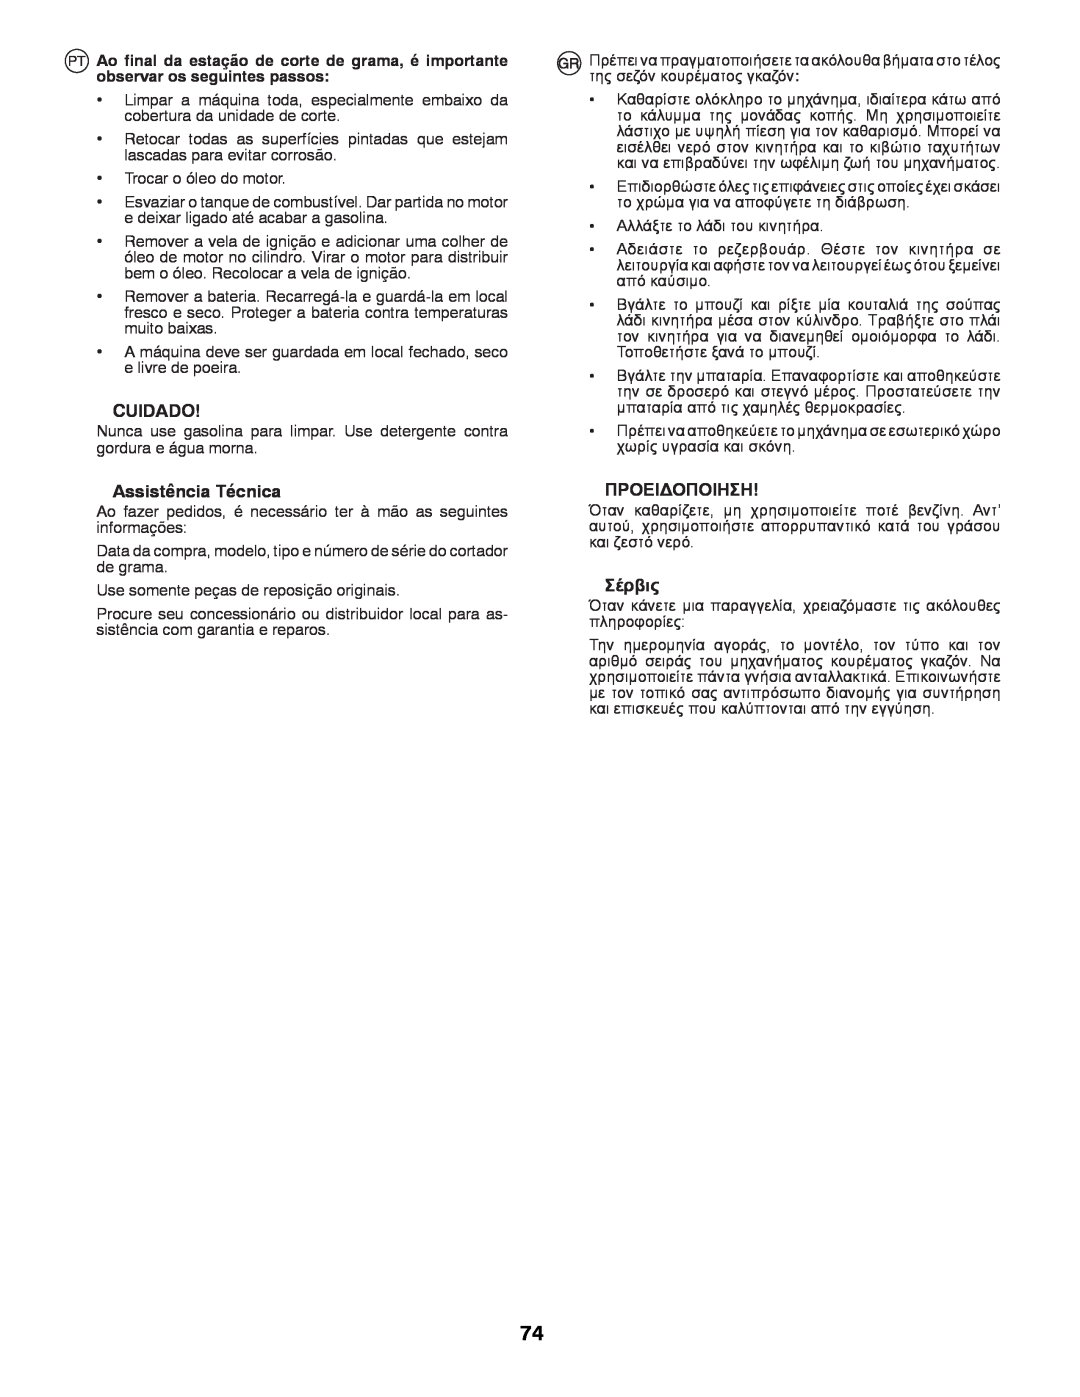 Partner Tech P145107 manual Cuidado, Assistência Técnica, Προειδοποιηση, Σέρβις 